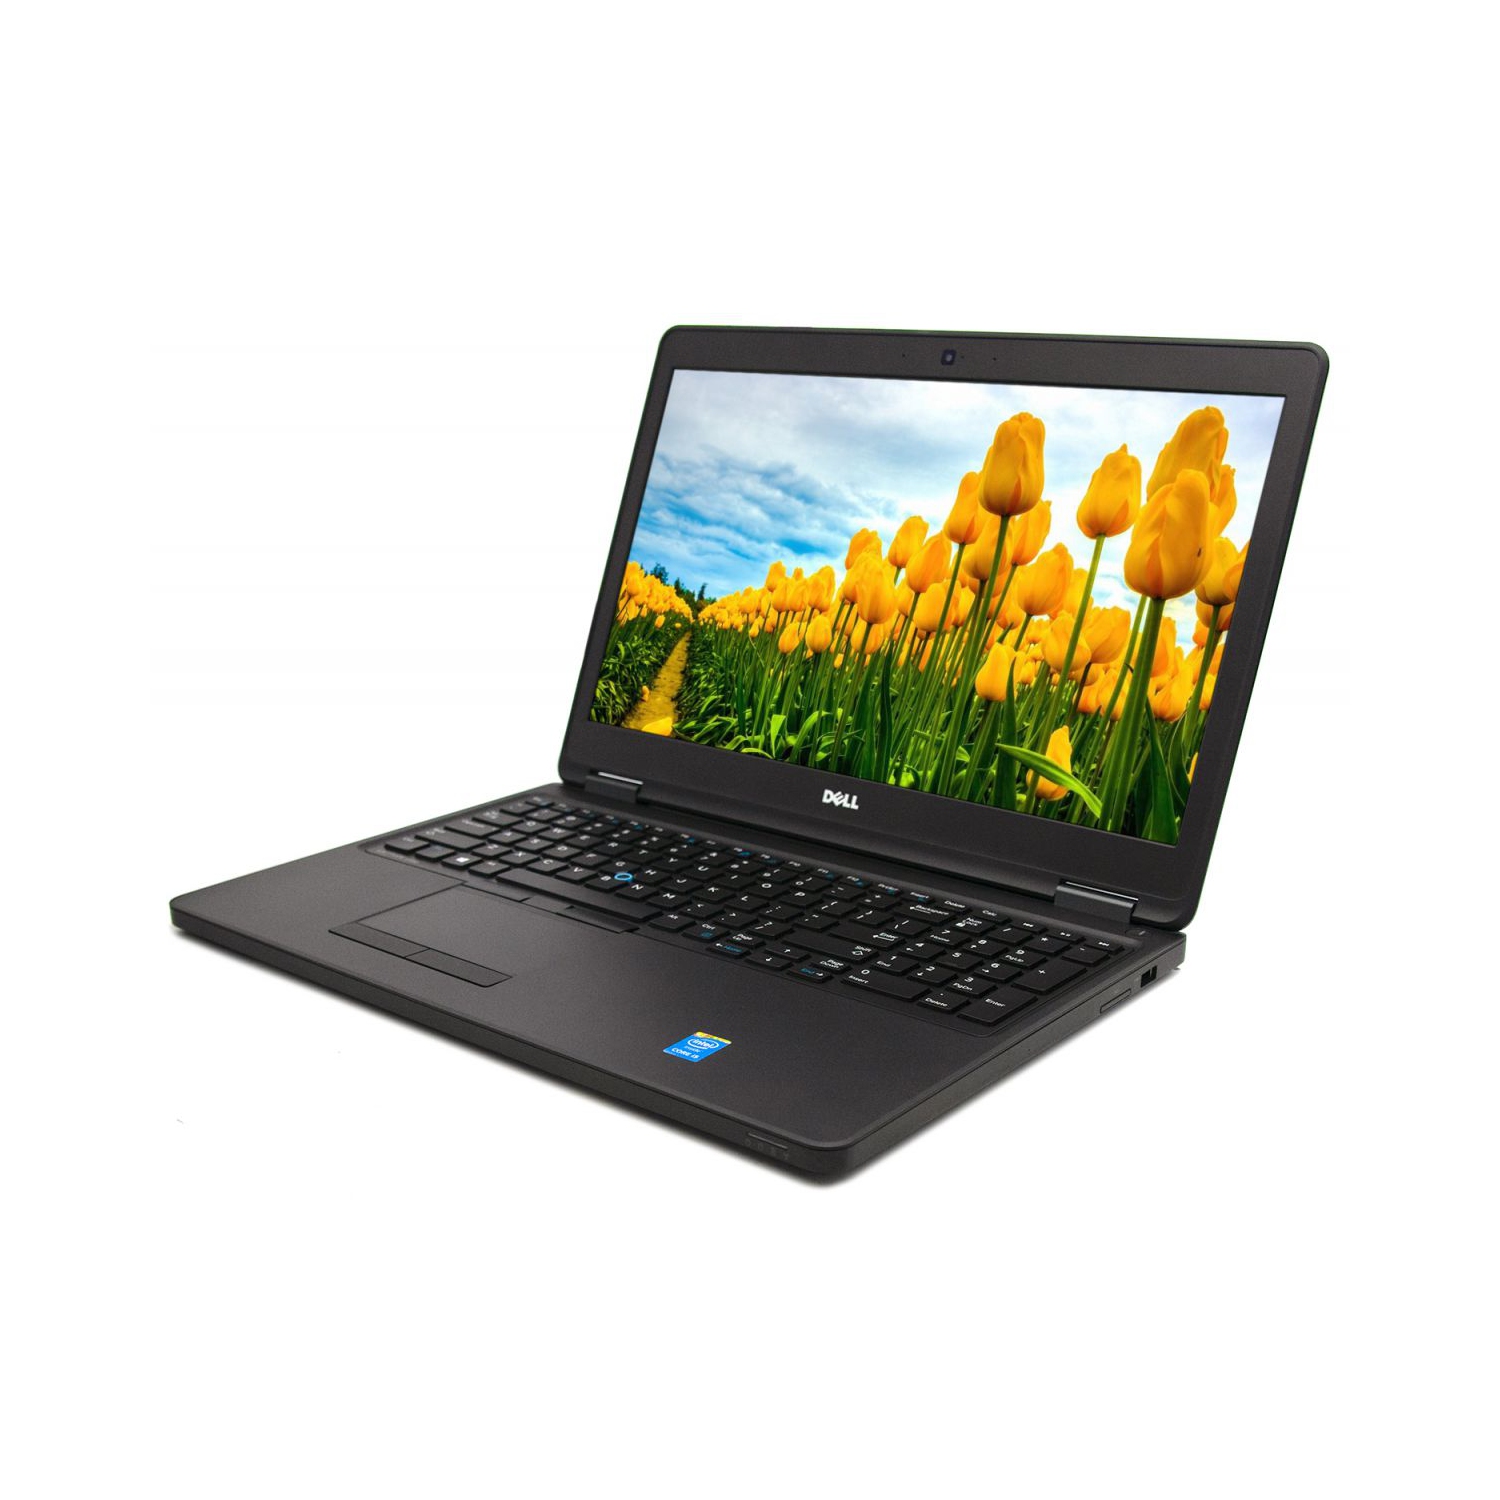 Refurbished (Good) - Dell Latitude E5550 15.6in Laptop, Core i5-5200U 2.2GHz, 8 GB RAM, 1 TB SSD, Windows 10 Pro